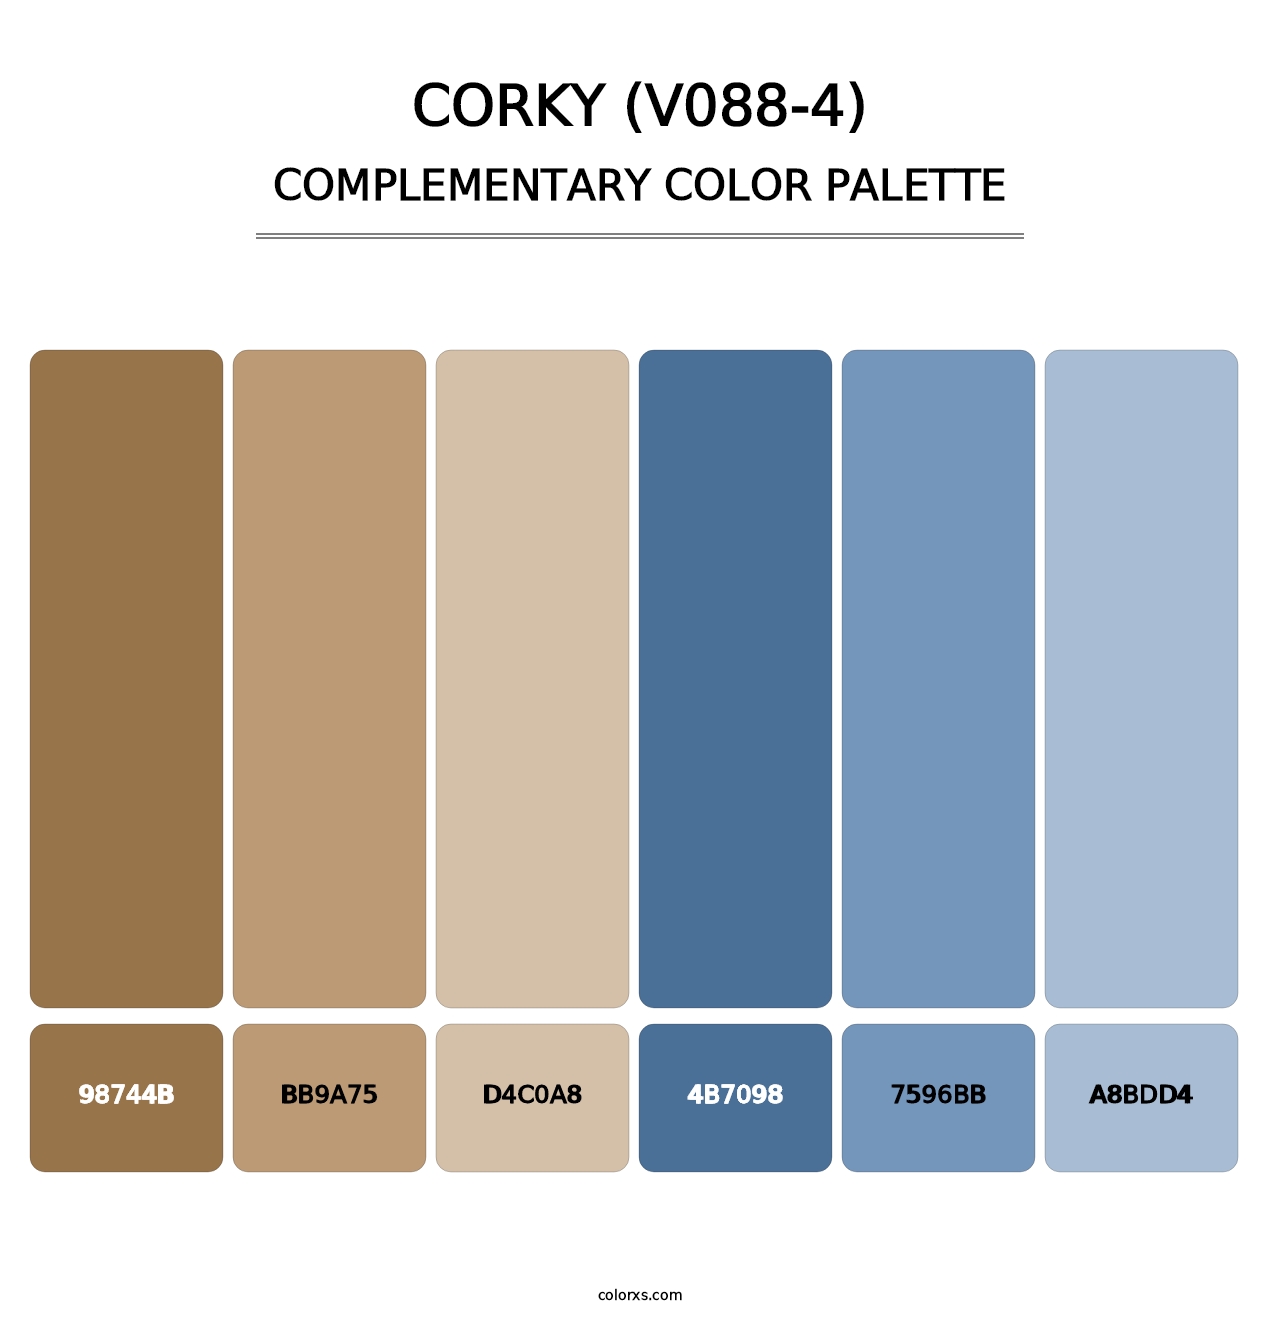 Corky (V088-4) - Complementary Color Palette